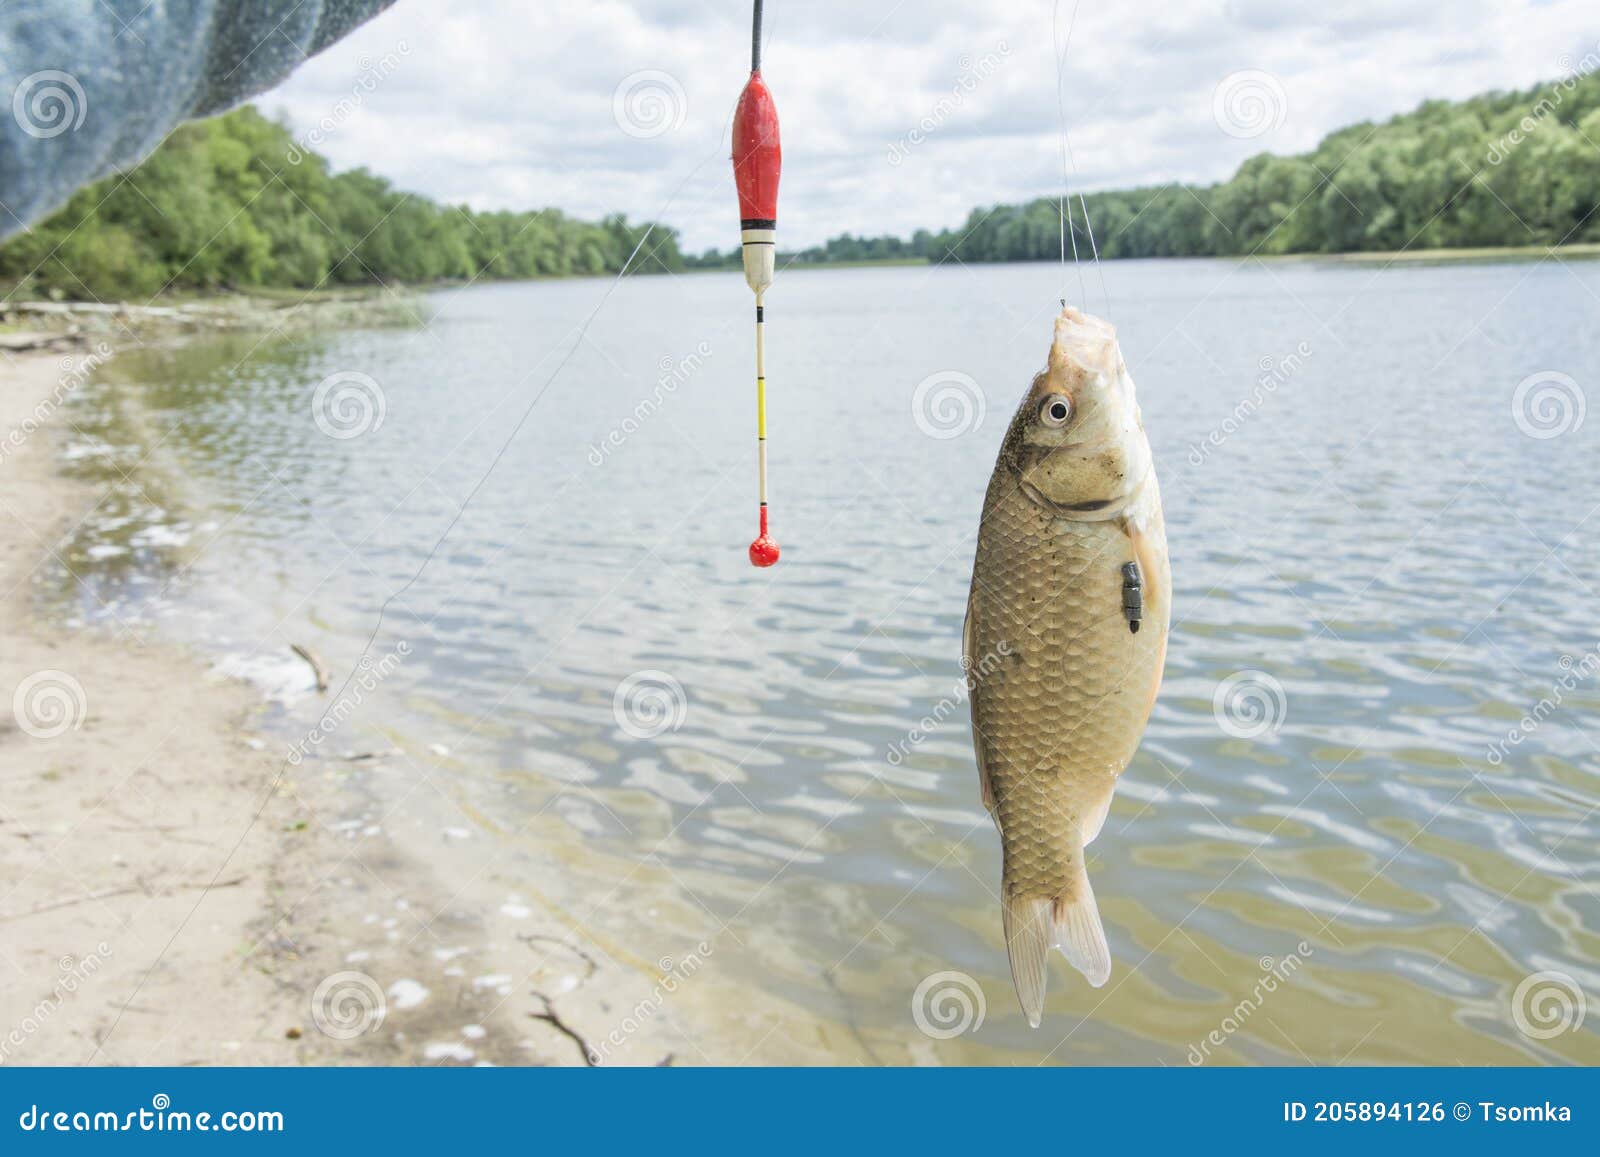 826 Carp Fishing Float Stock Photos - Free & Royalty-Free Stock